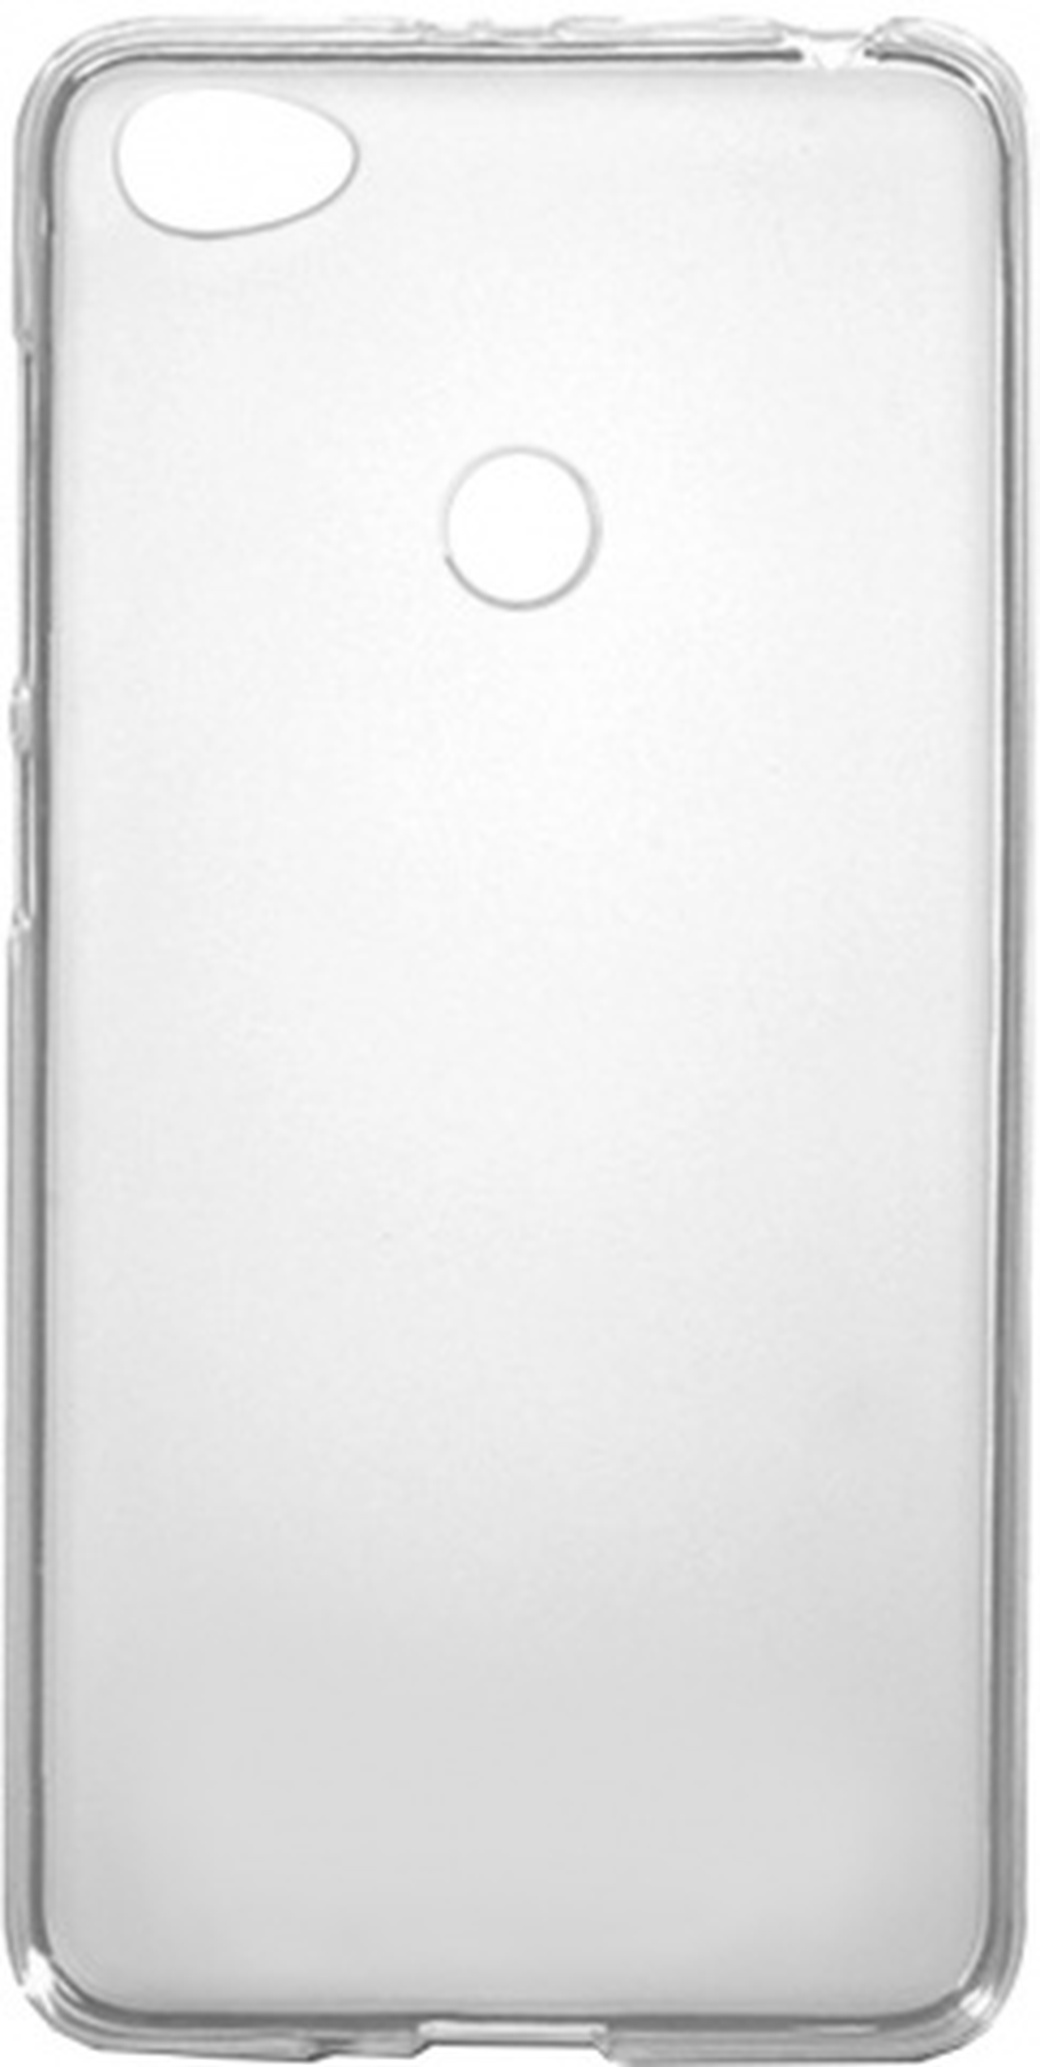 Чехол для смартфона Xiaomi Redmi Note 5A (2+16GB) Silicone iBox Crystal (прозрачный), Redline фото